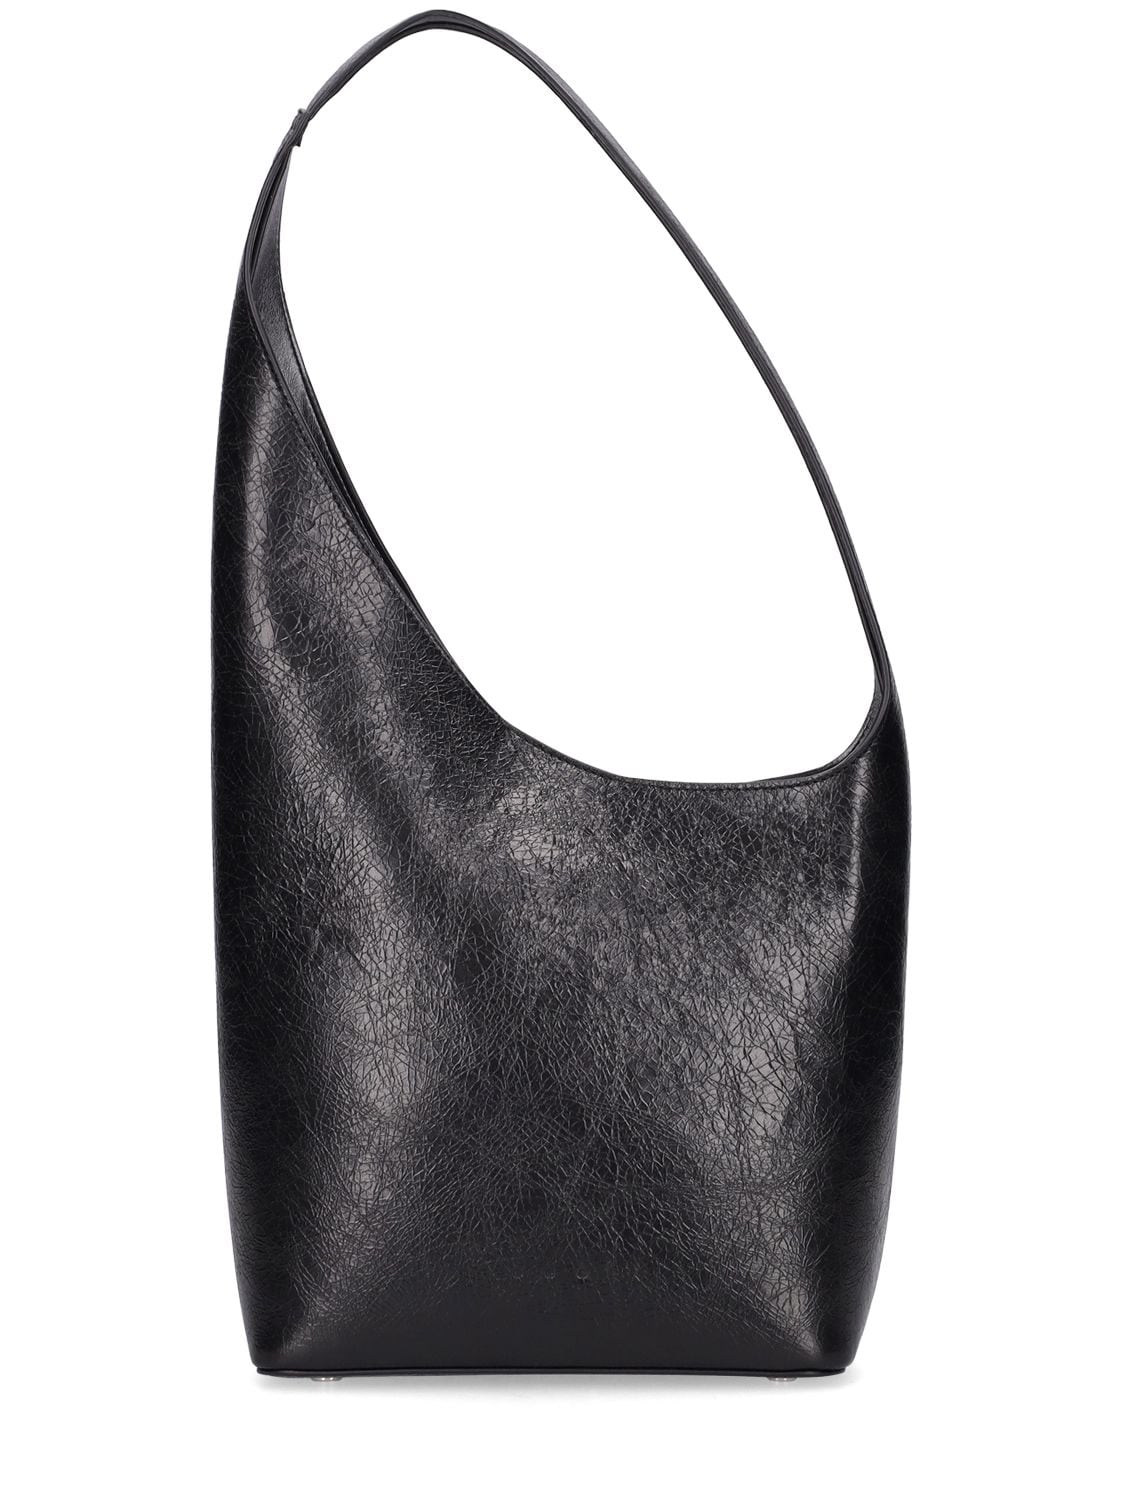 Demi Lune Crackled Leather Bag In Black Thunder